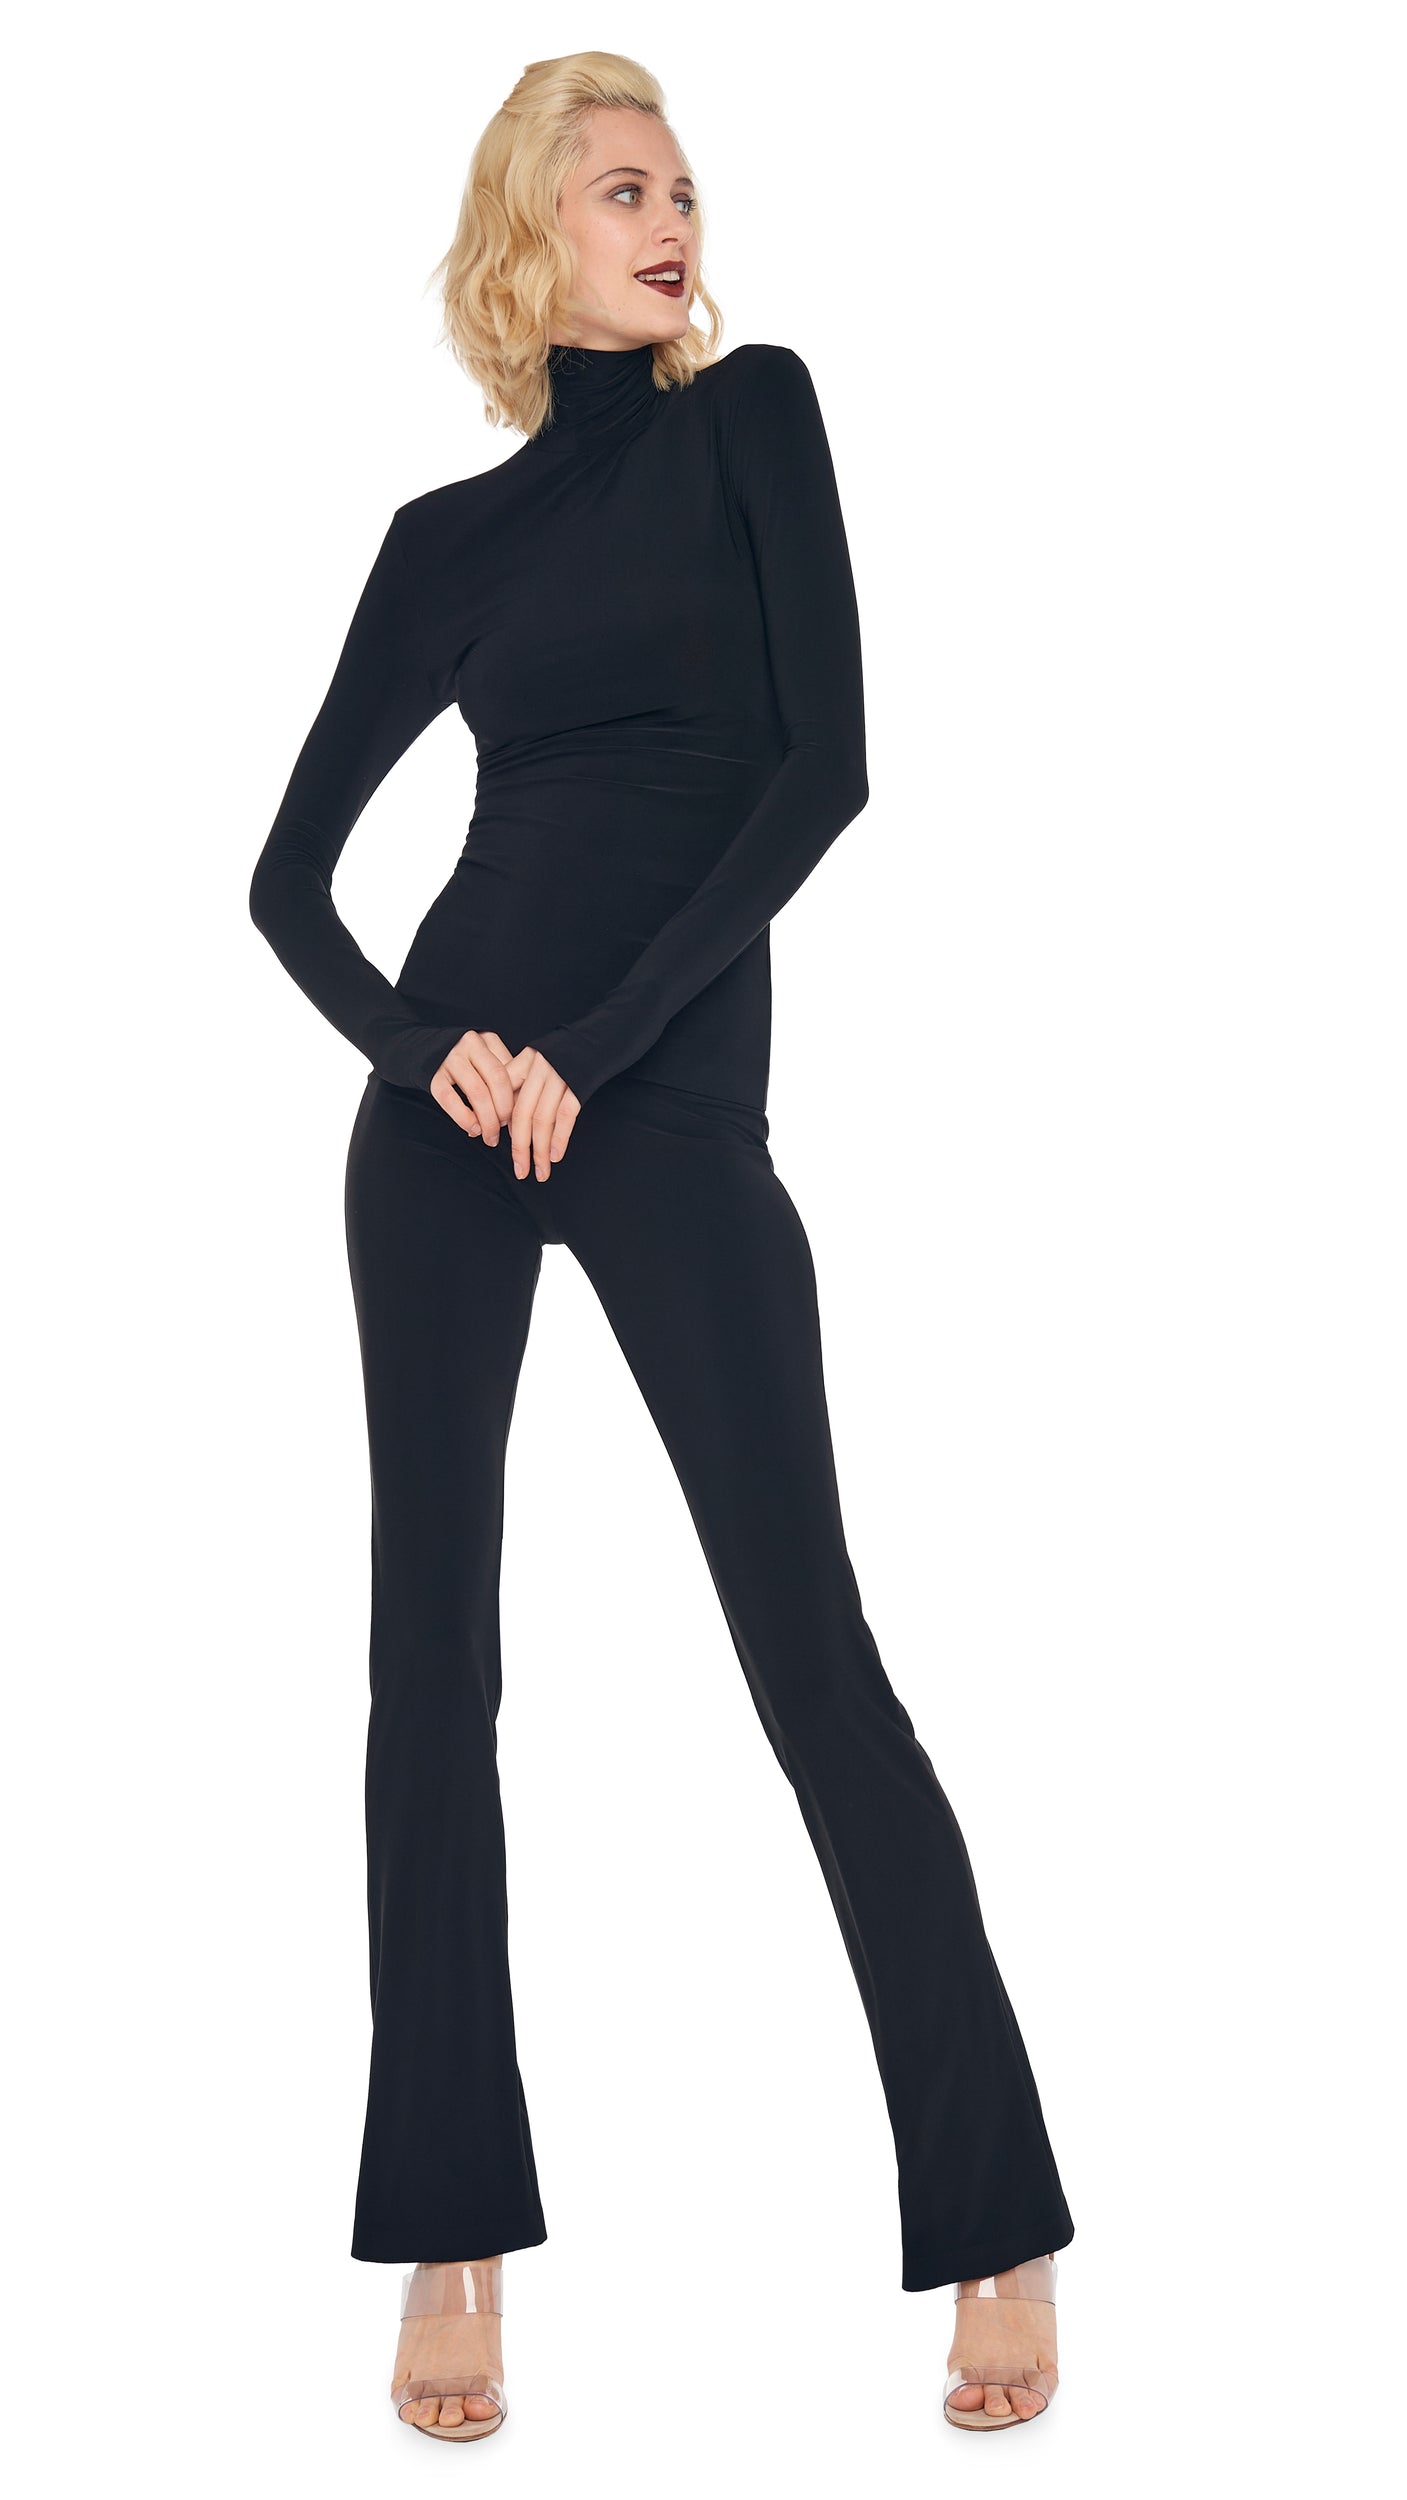 Norma Kamali Slim Fit Long Sleeve Turtleneck Top - Black